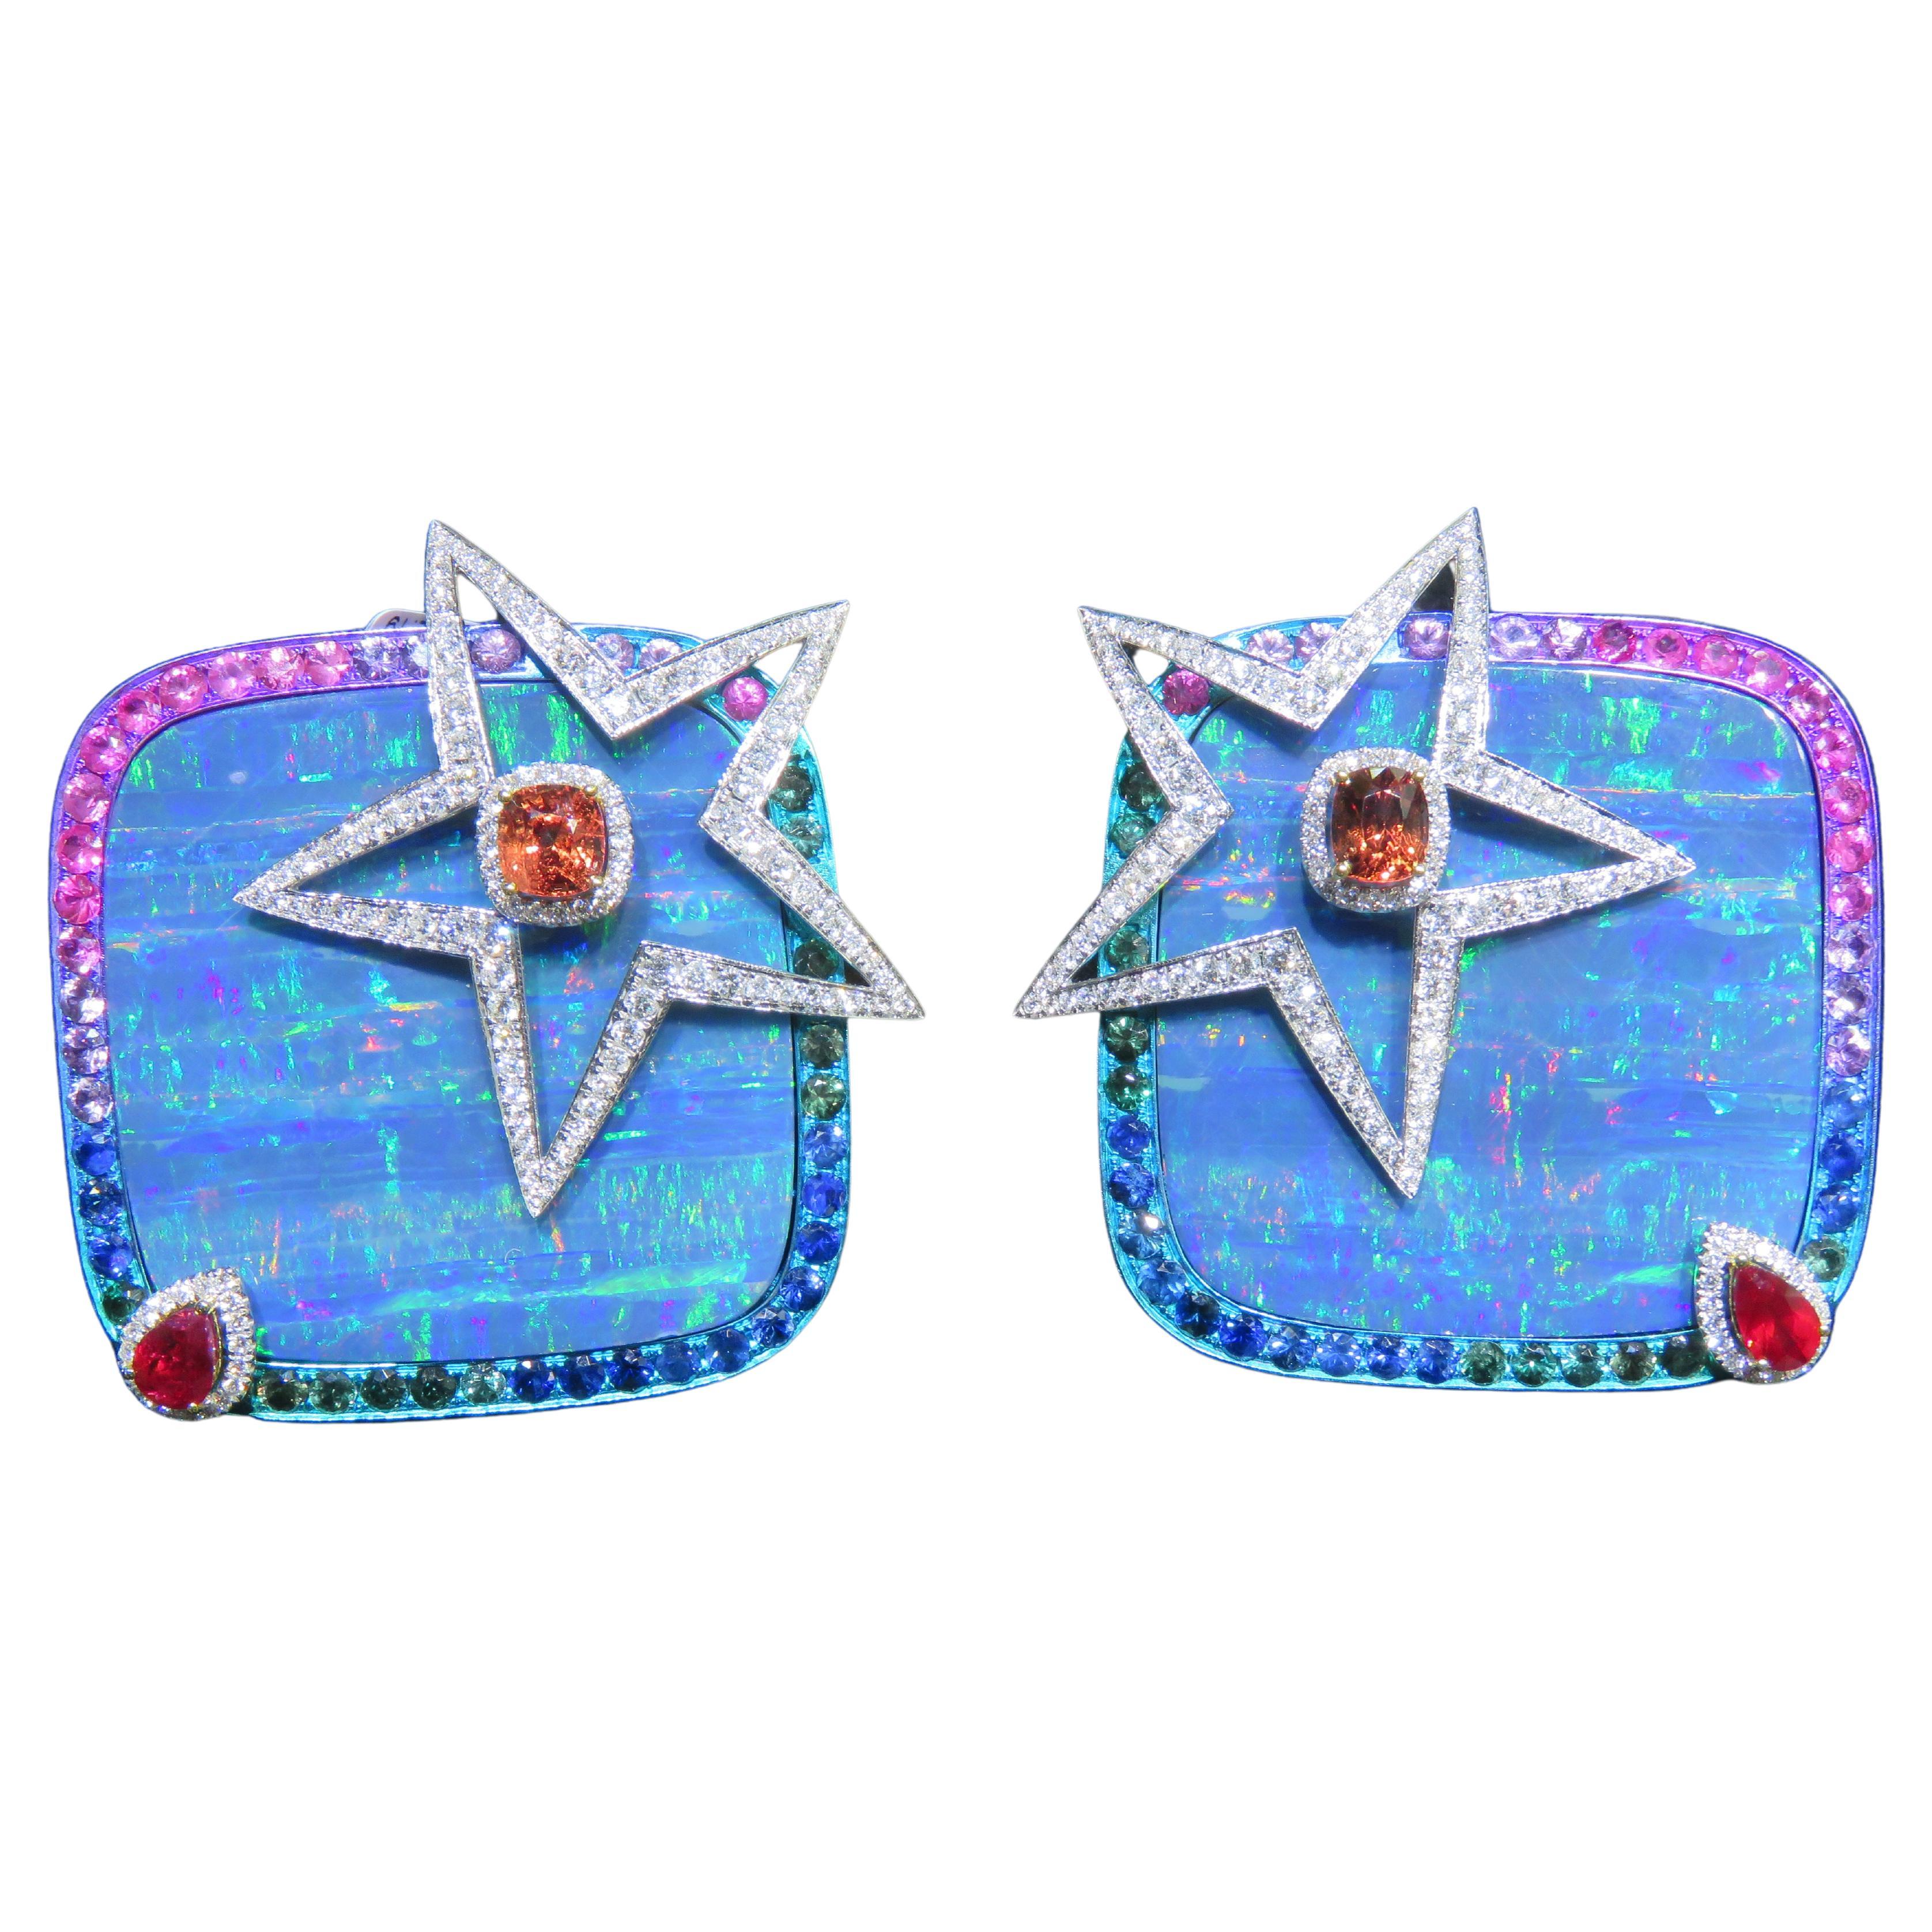 Nwt $54, 000 18kt Große wunderschöne Fiery Opal Regenbogen Saphir Diamant-Ohrringe